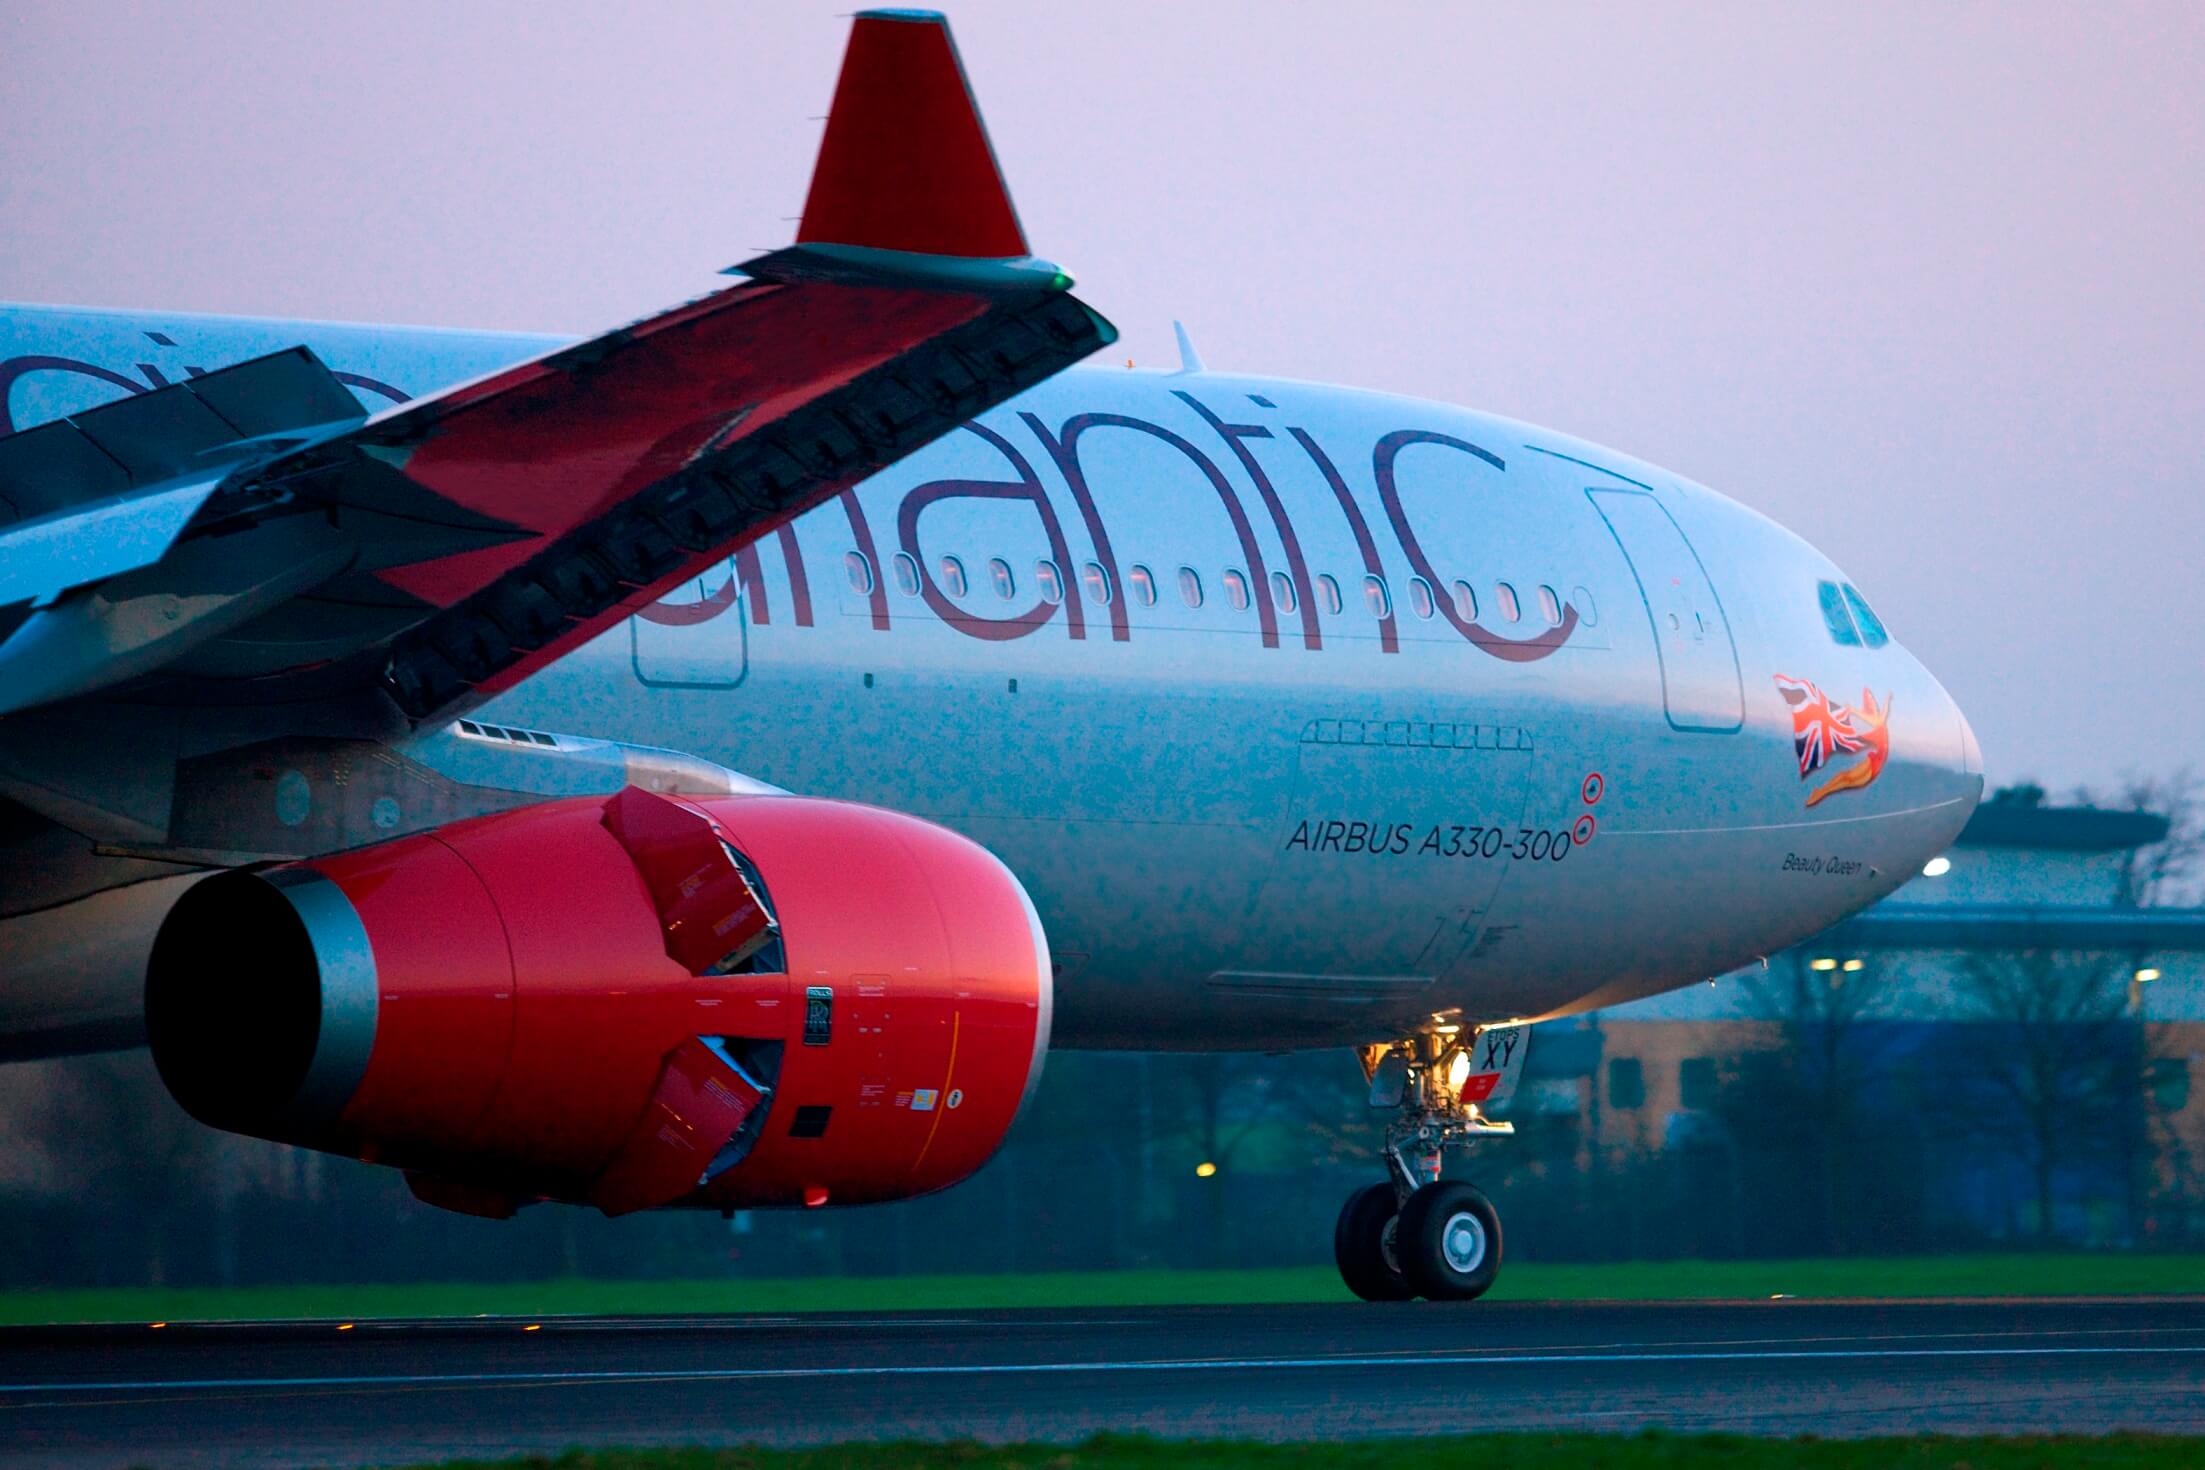 Virgin Atlantic launches new service between London Heathrow and Tel Aviv